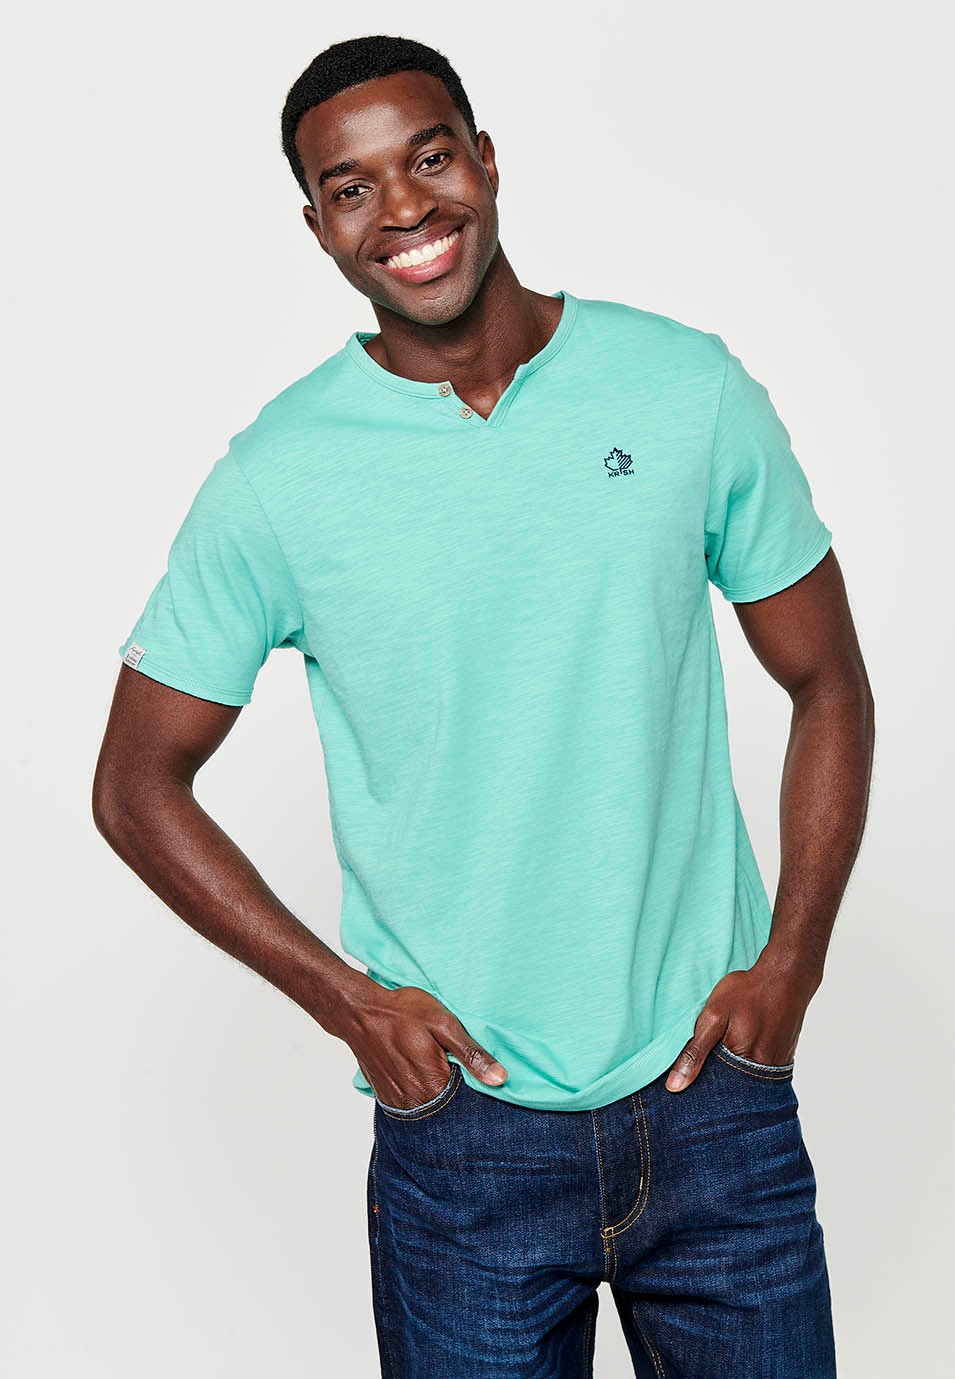 Basic short-sleeved cotton t-shirt, V-neck with button, mint color for men 5